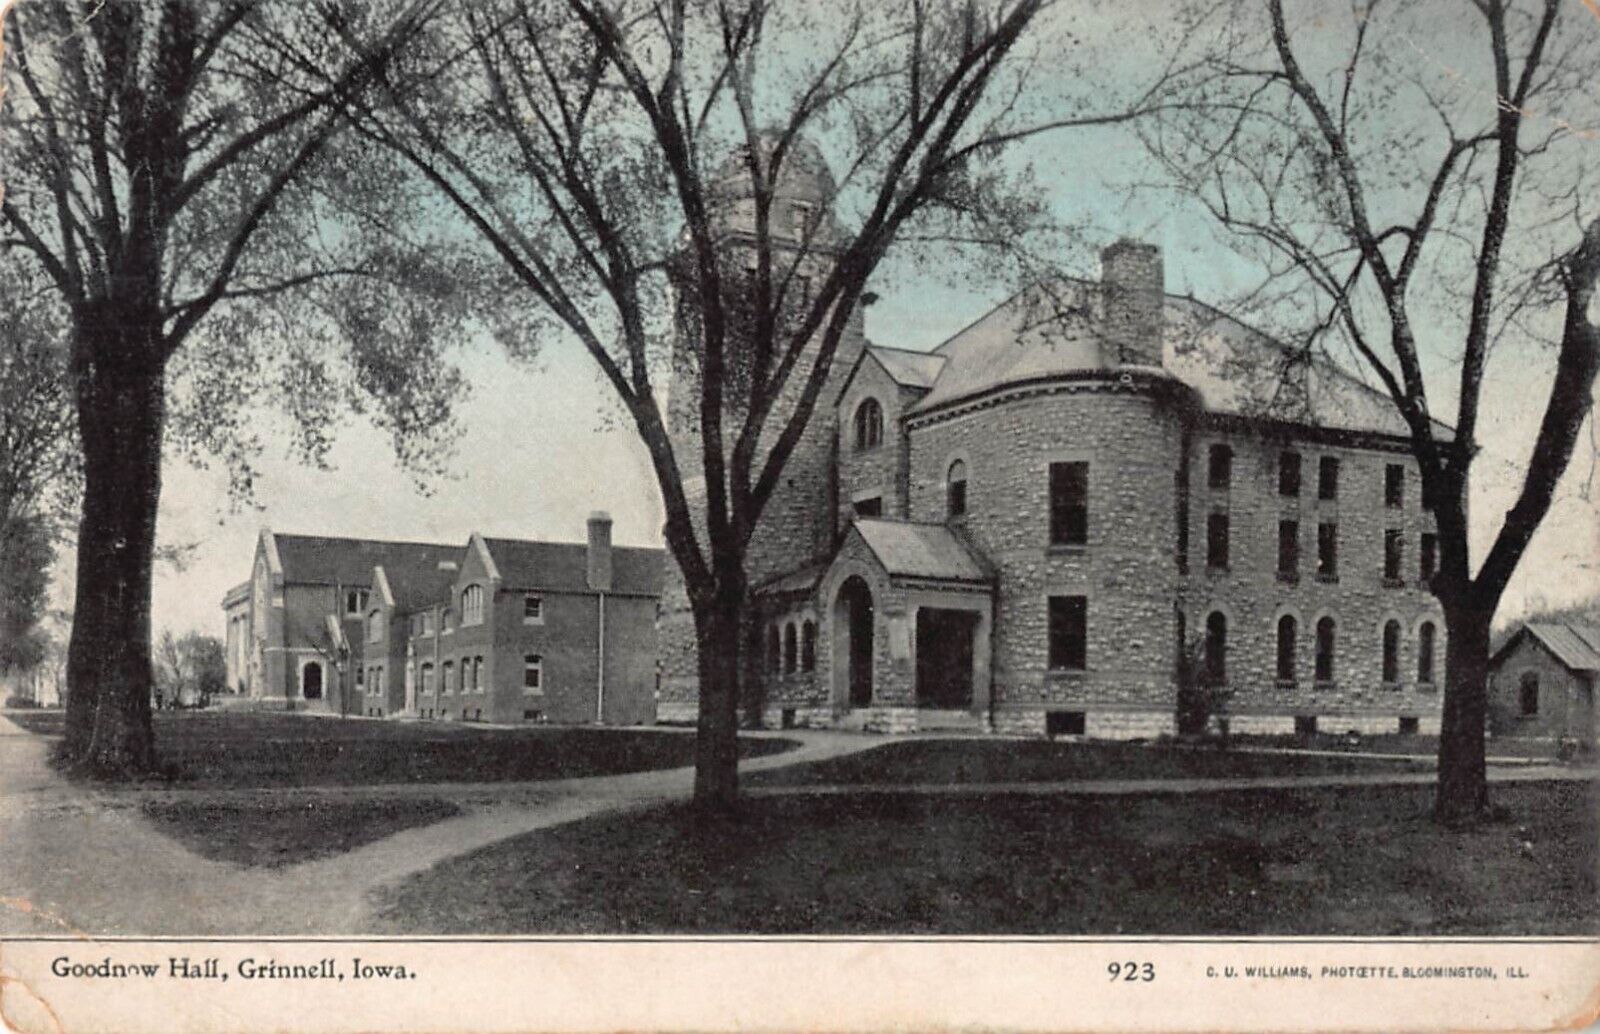 Goodnow Hall, Grinnell, Iowa - 1911 Postcard